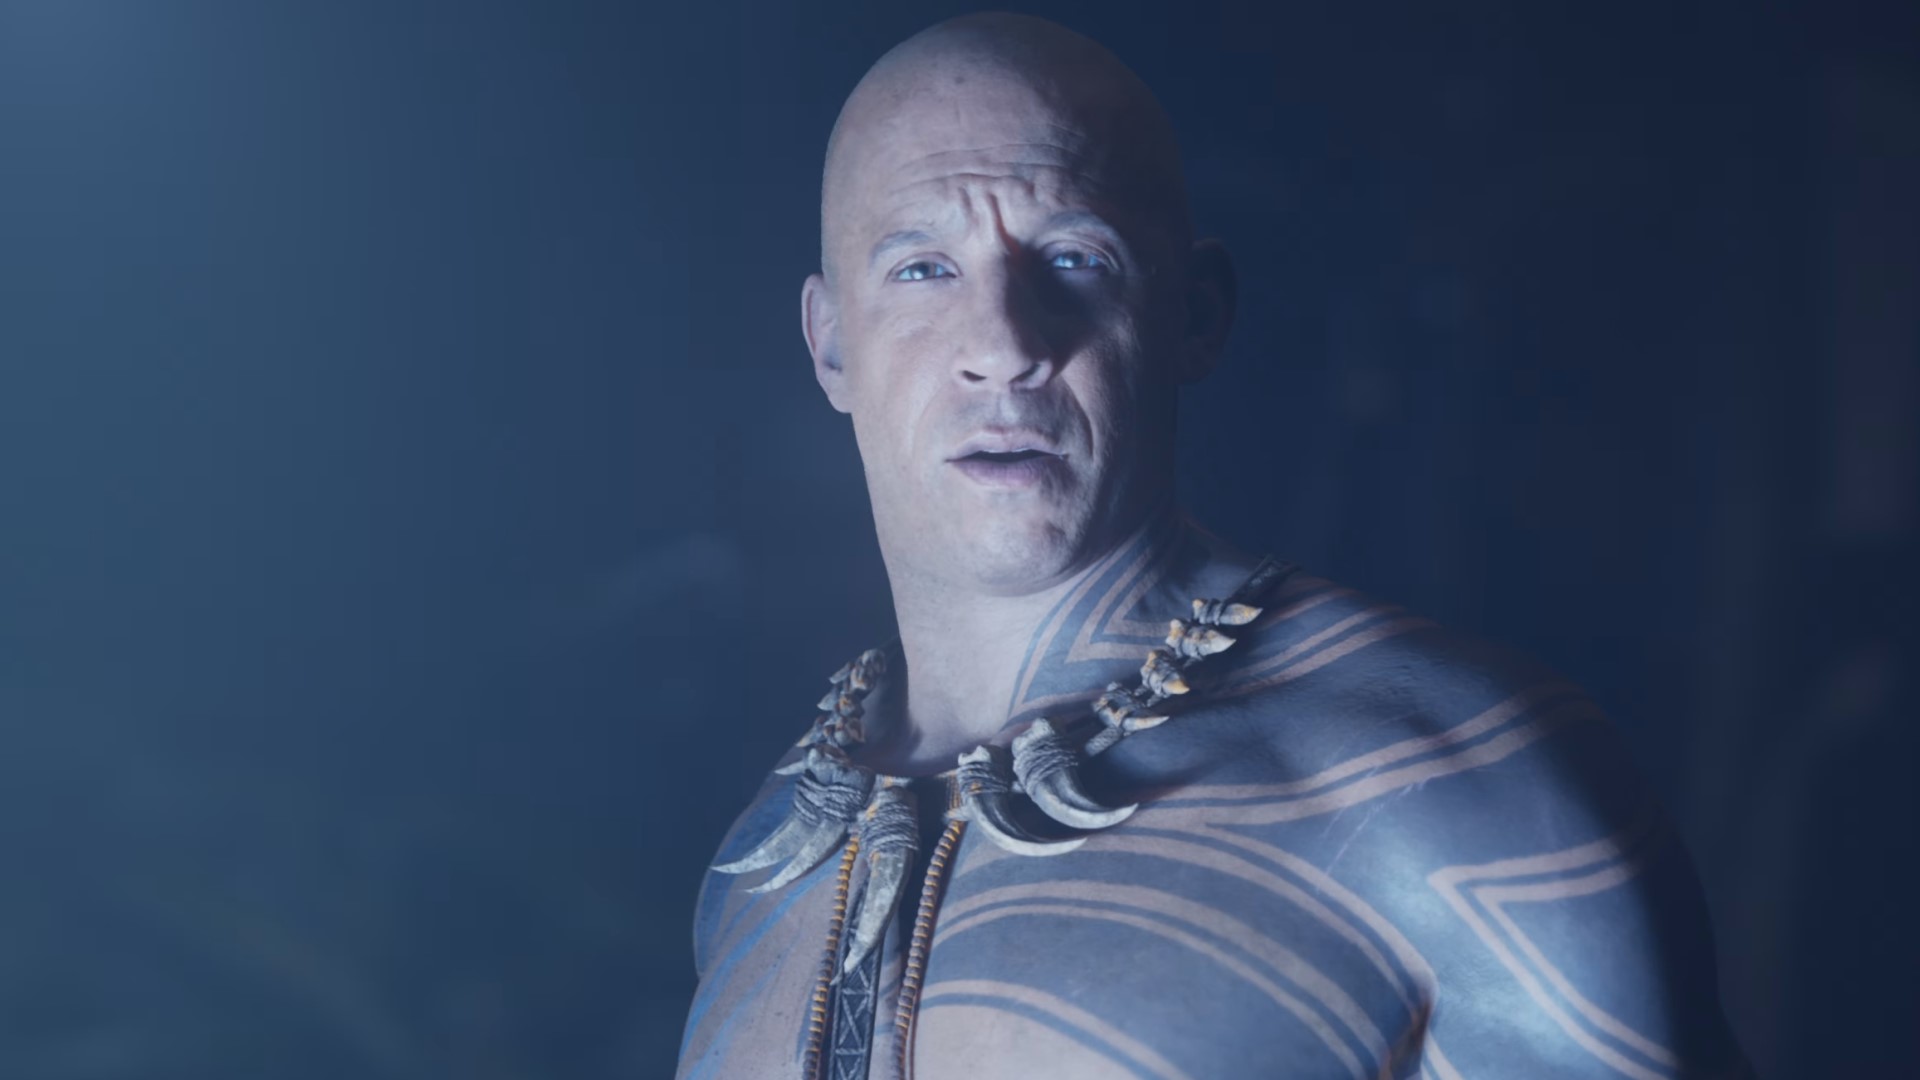 Ark 2 Announced With Vin Diesel - IGN